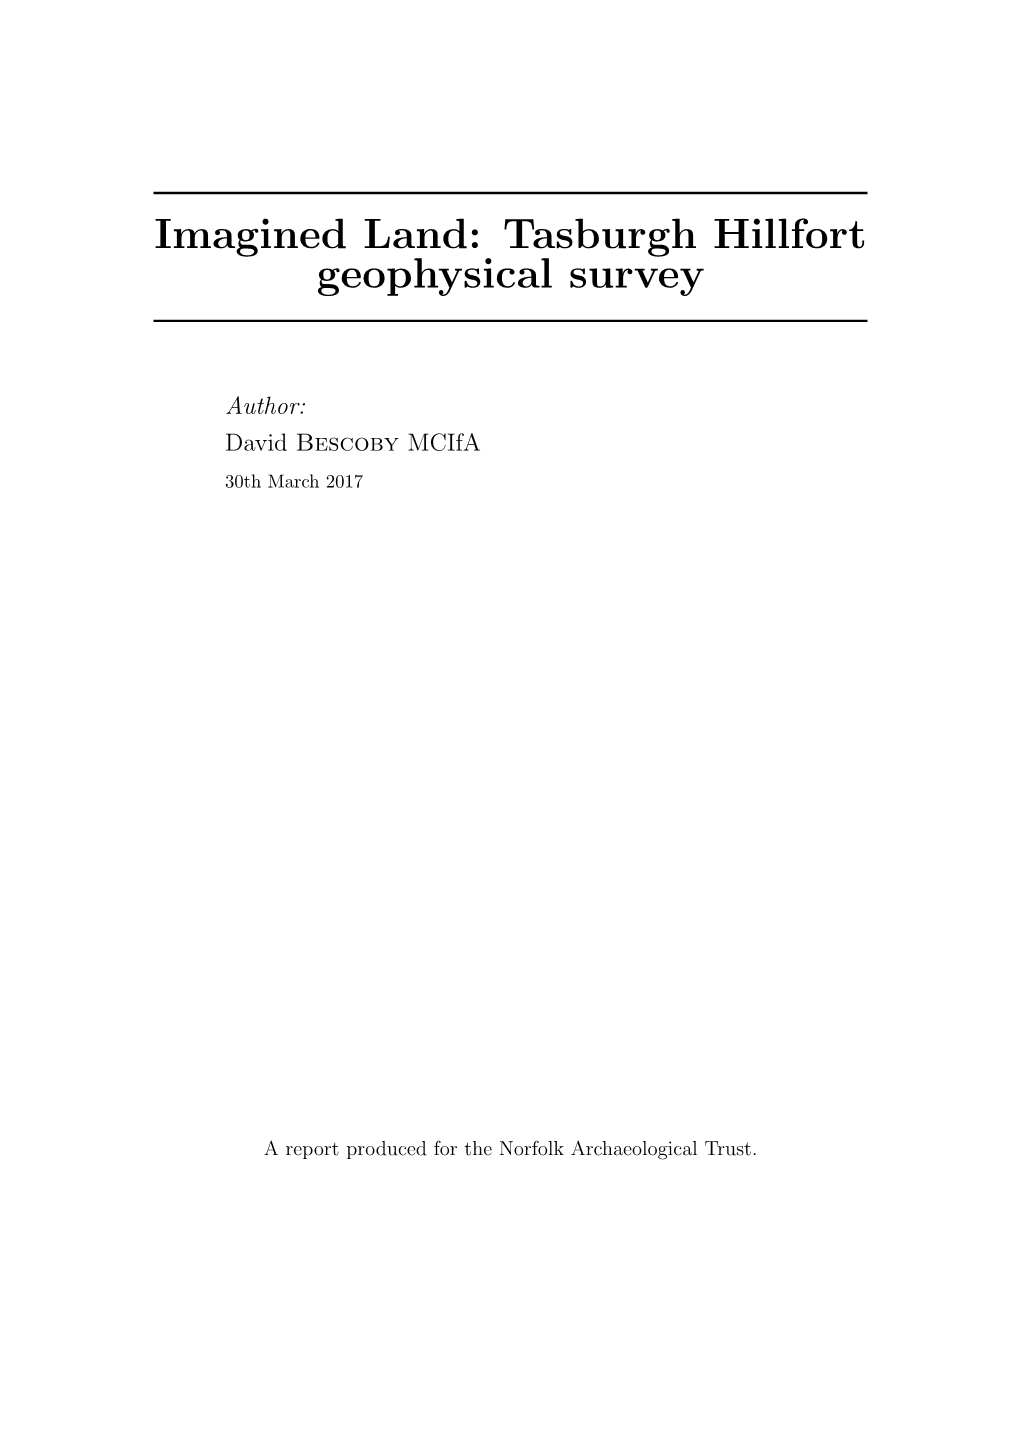 Tasburgh Hillfort Geophysical Survey